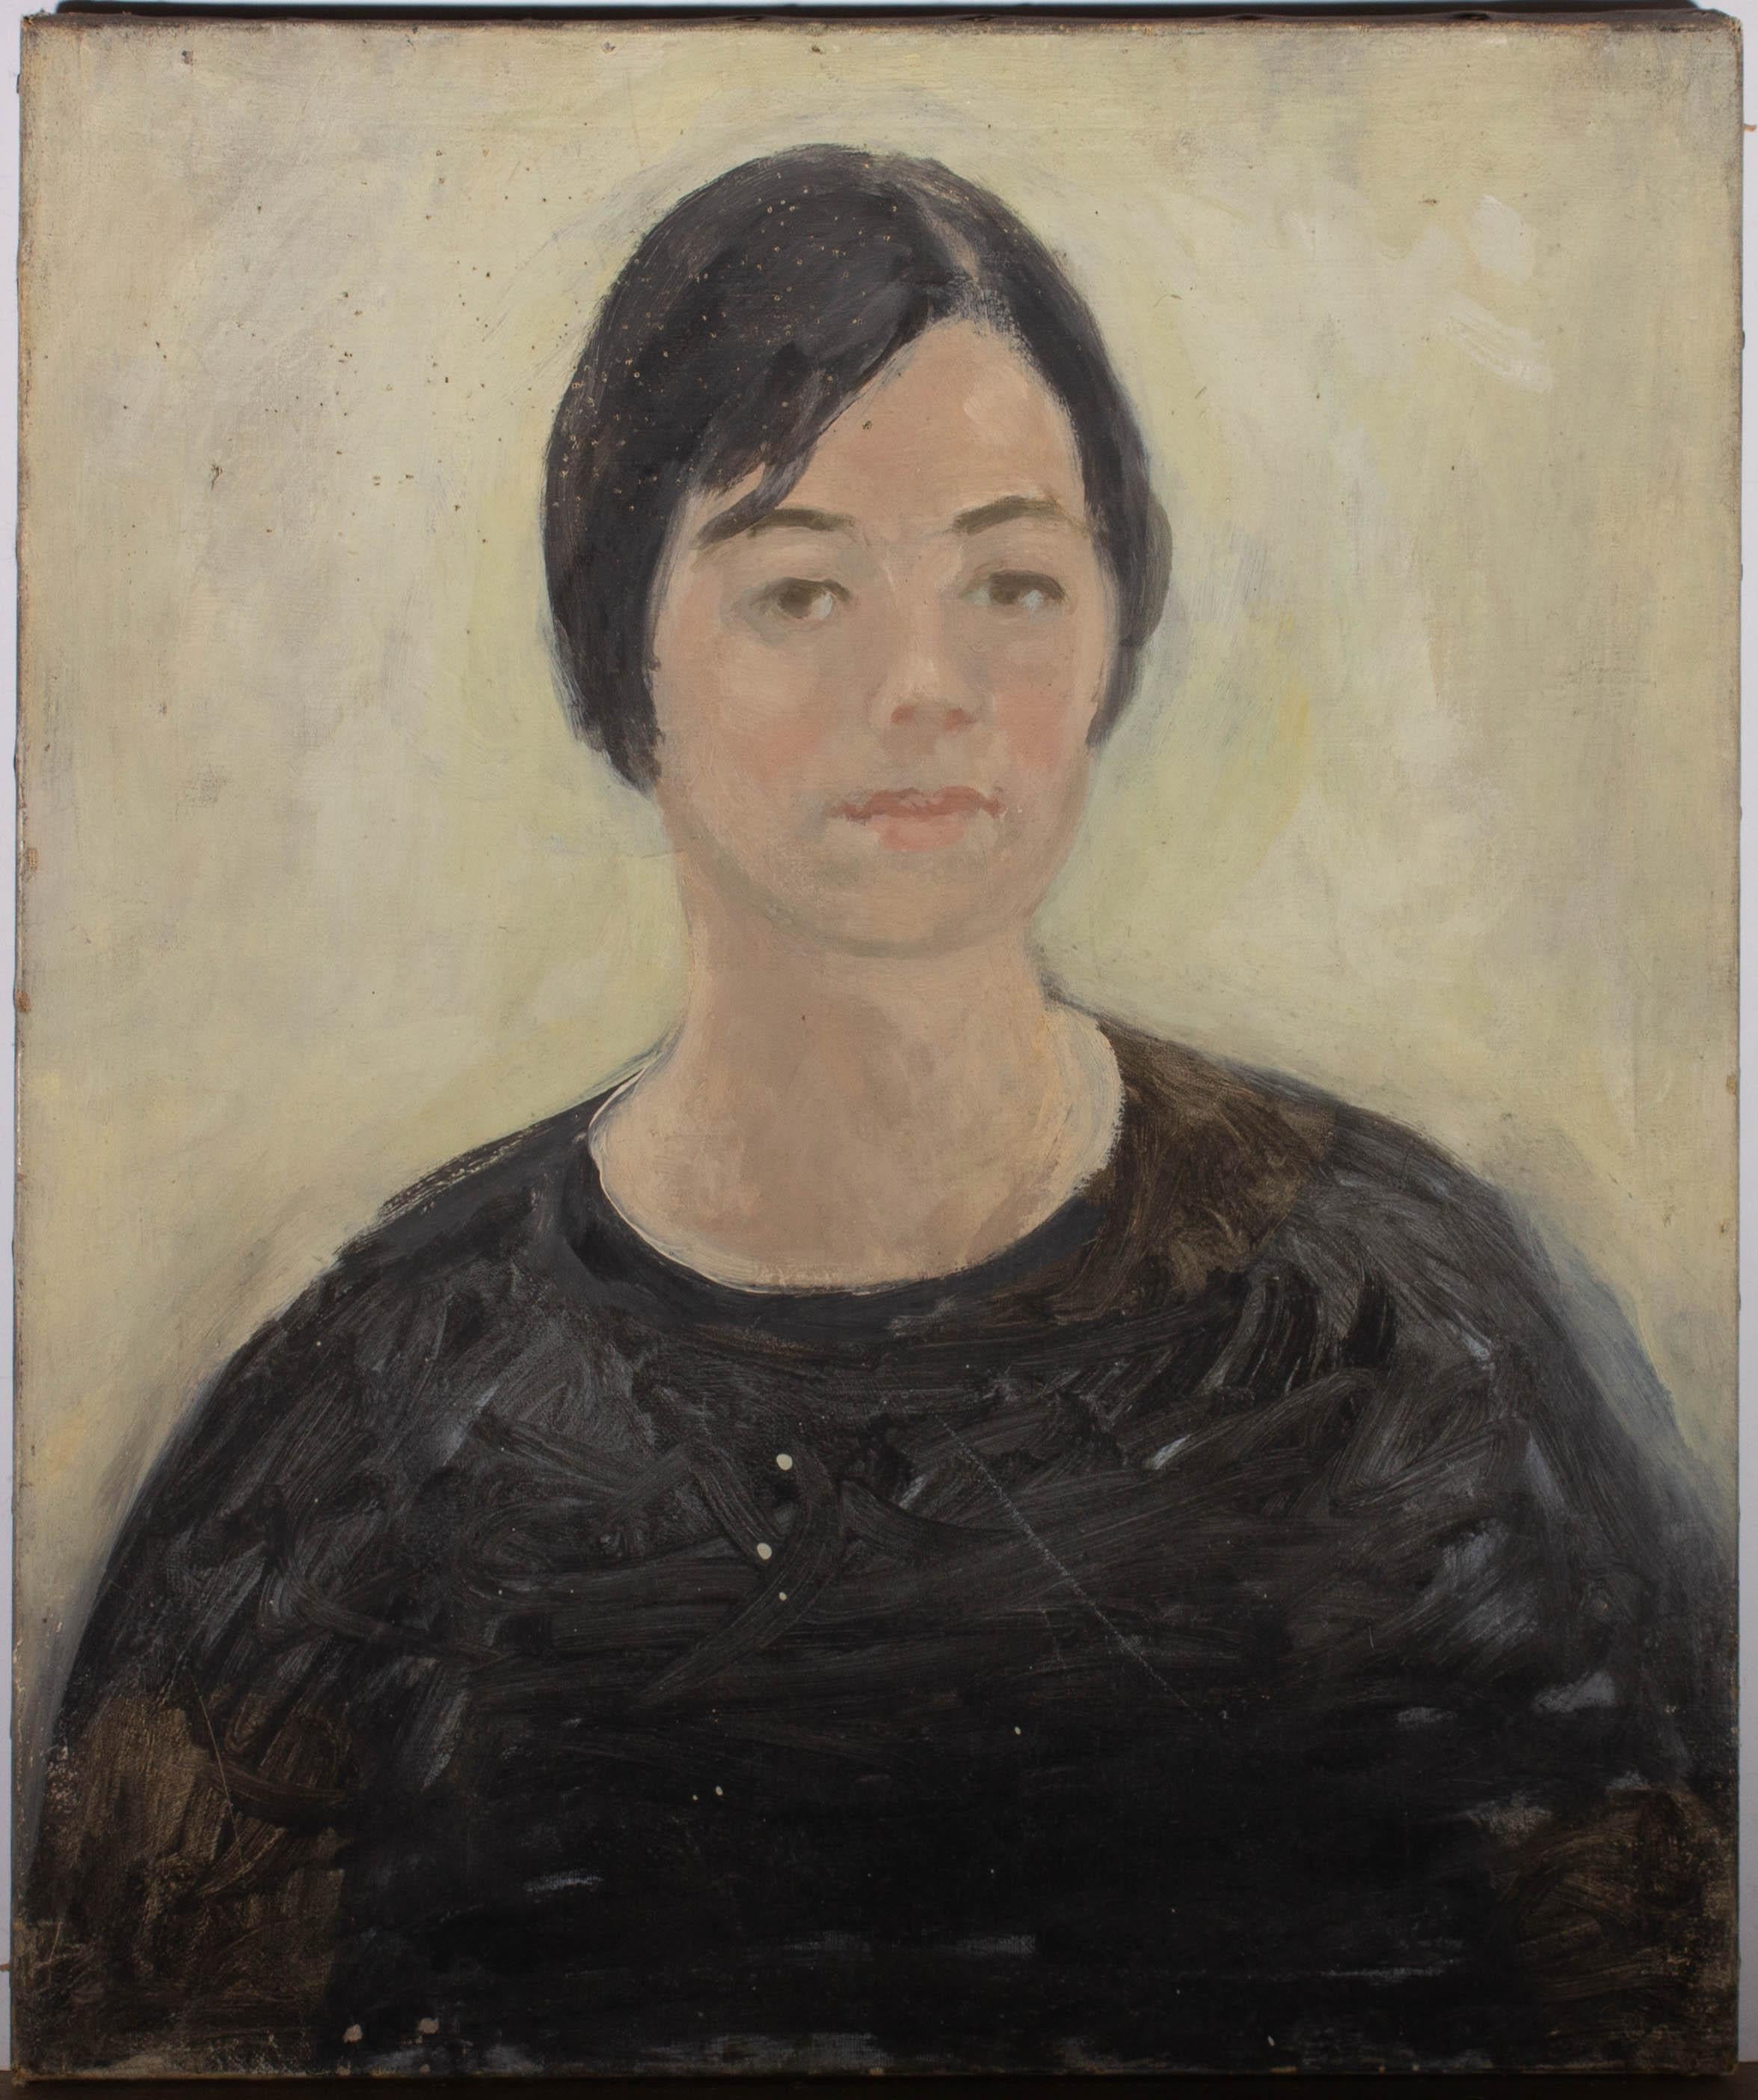 Unknown Portrait Painting - Mid 20th Century Oil - Soft Gaze